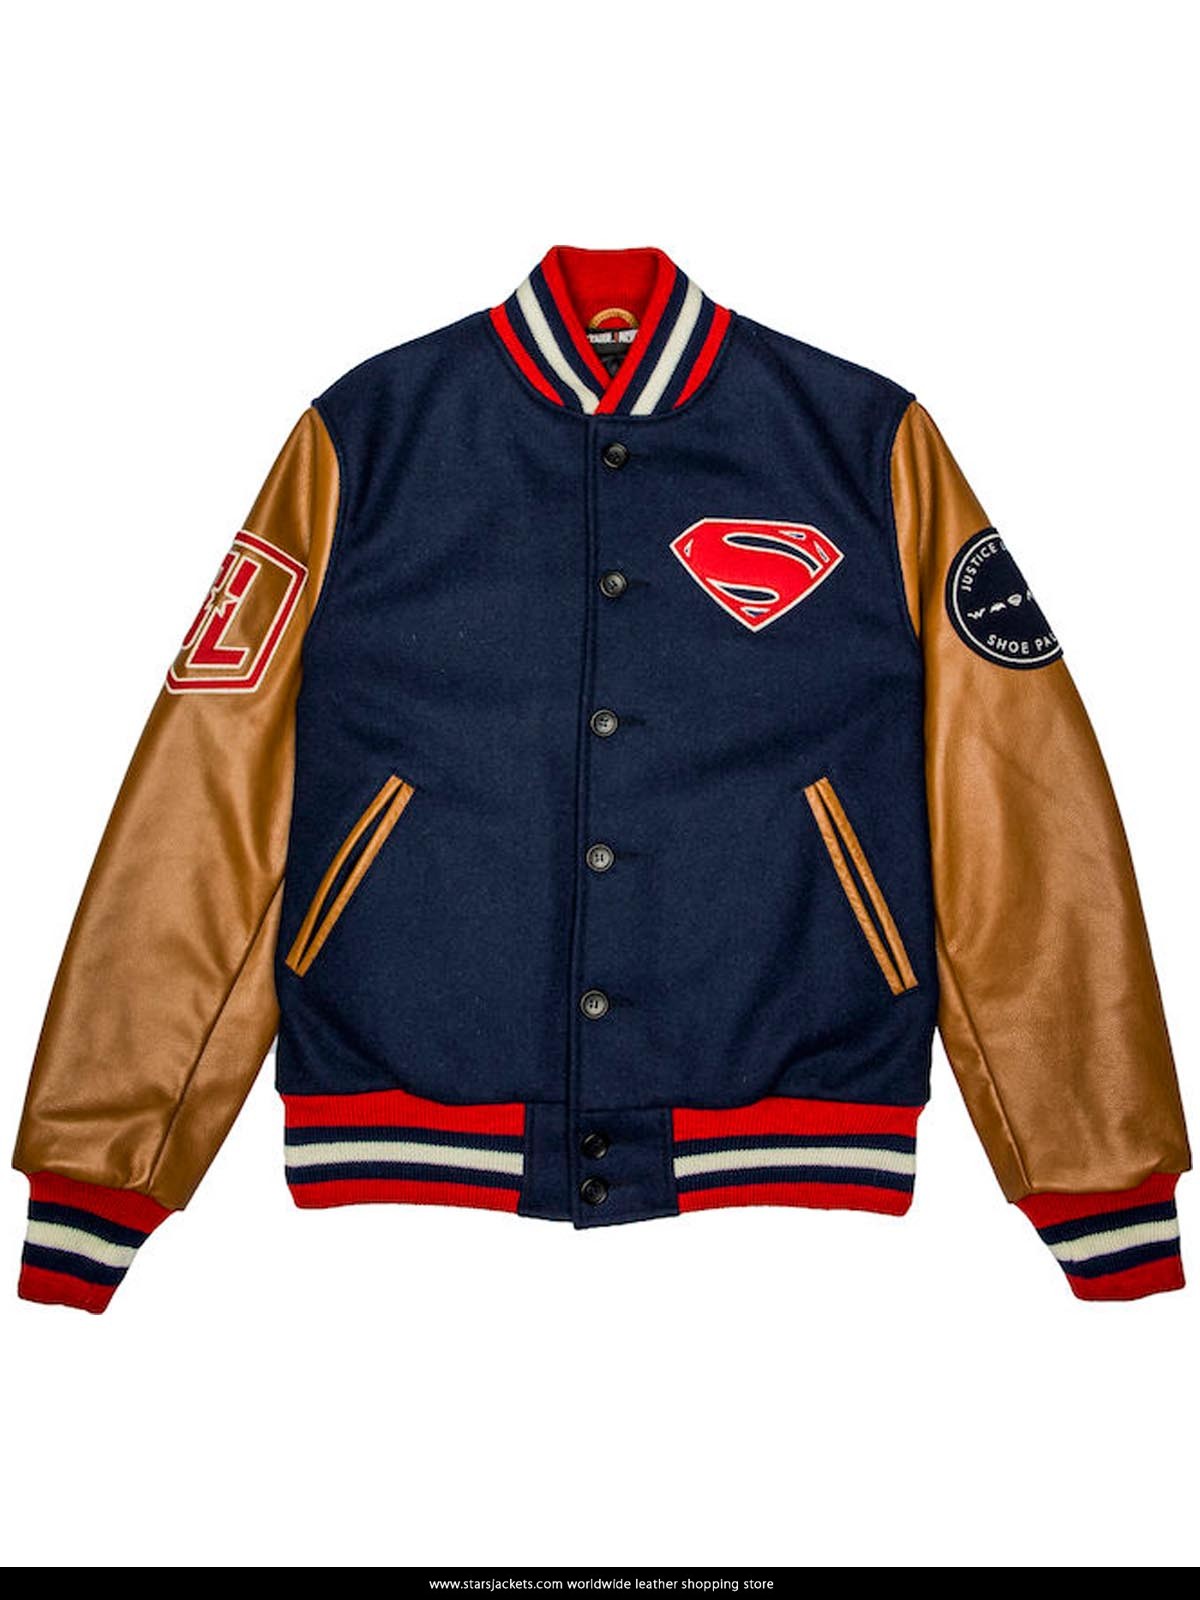 Superman Varsity Jacket form Justice 